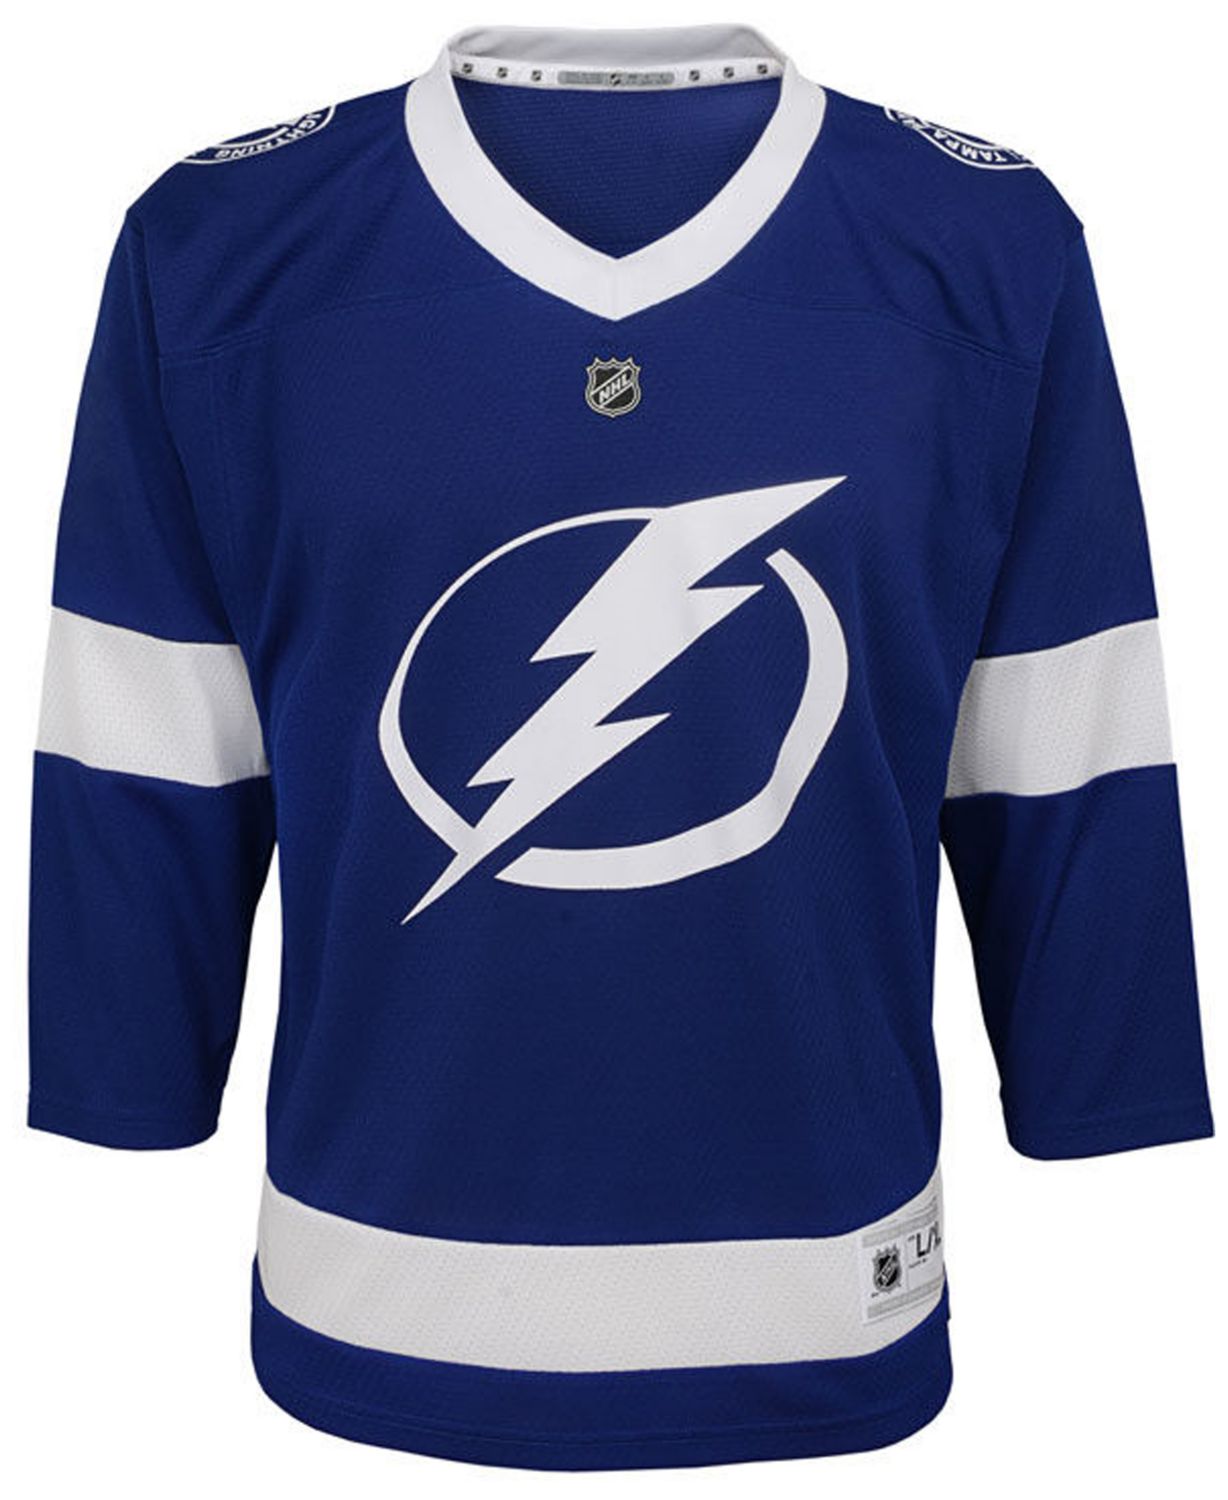 Authentic NHL Apparel Tampa Bay Lightning Blank Replica Jersey, Big Boys (8-20) & Reviews - Sports Fan Shop By Lids - Men - Macy's